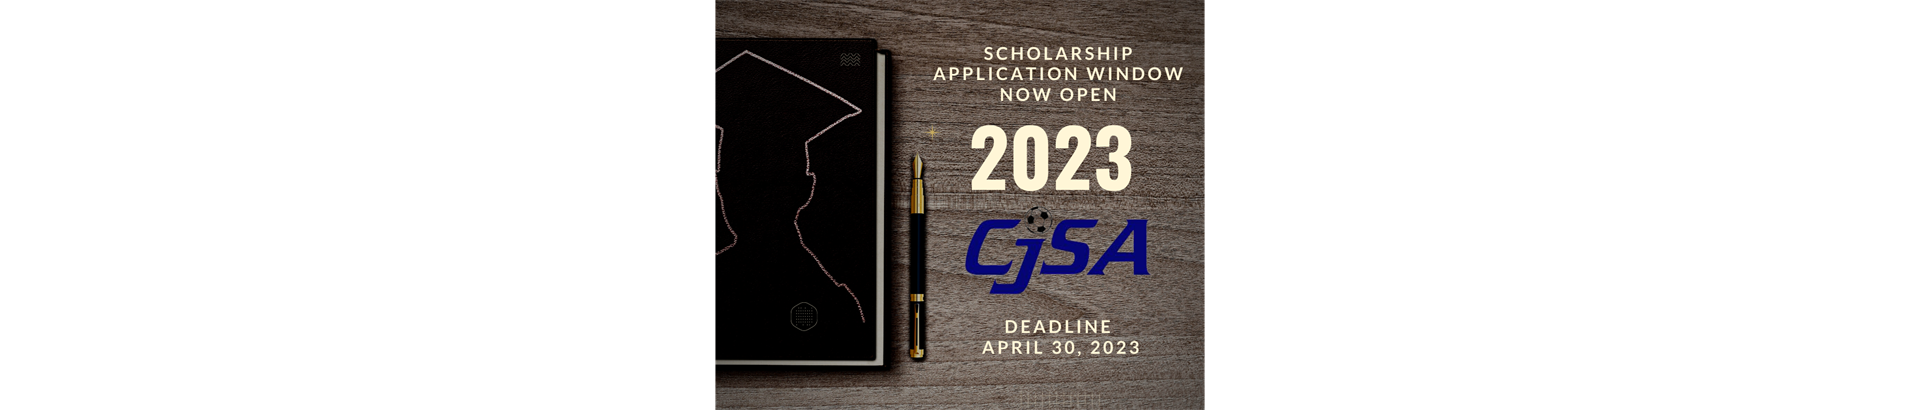 Scholarship Application Window Open Now